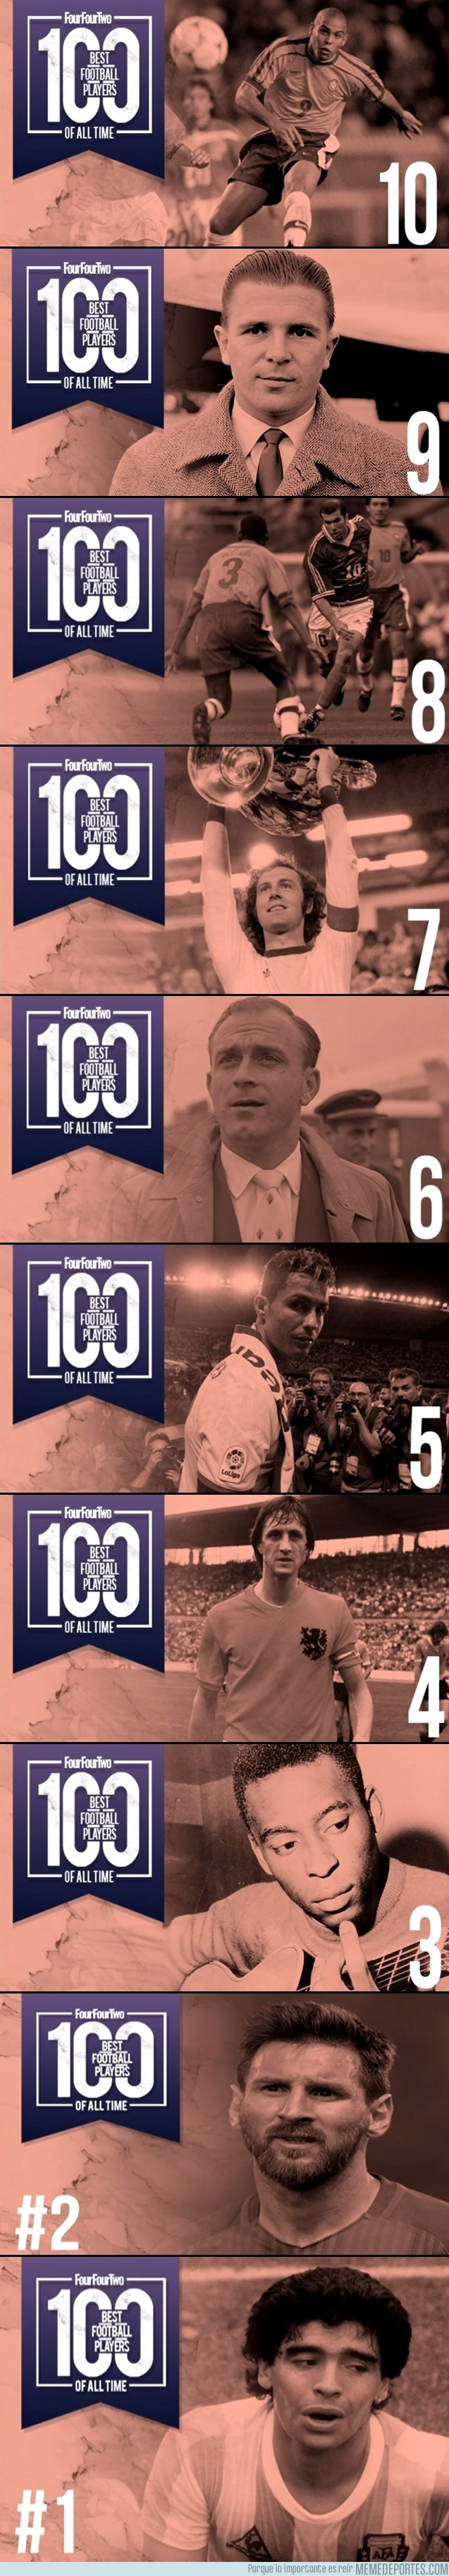 989894 - La revista Four Four Two saca el top 10 de mejores jugadores de la historia